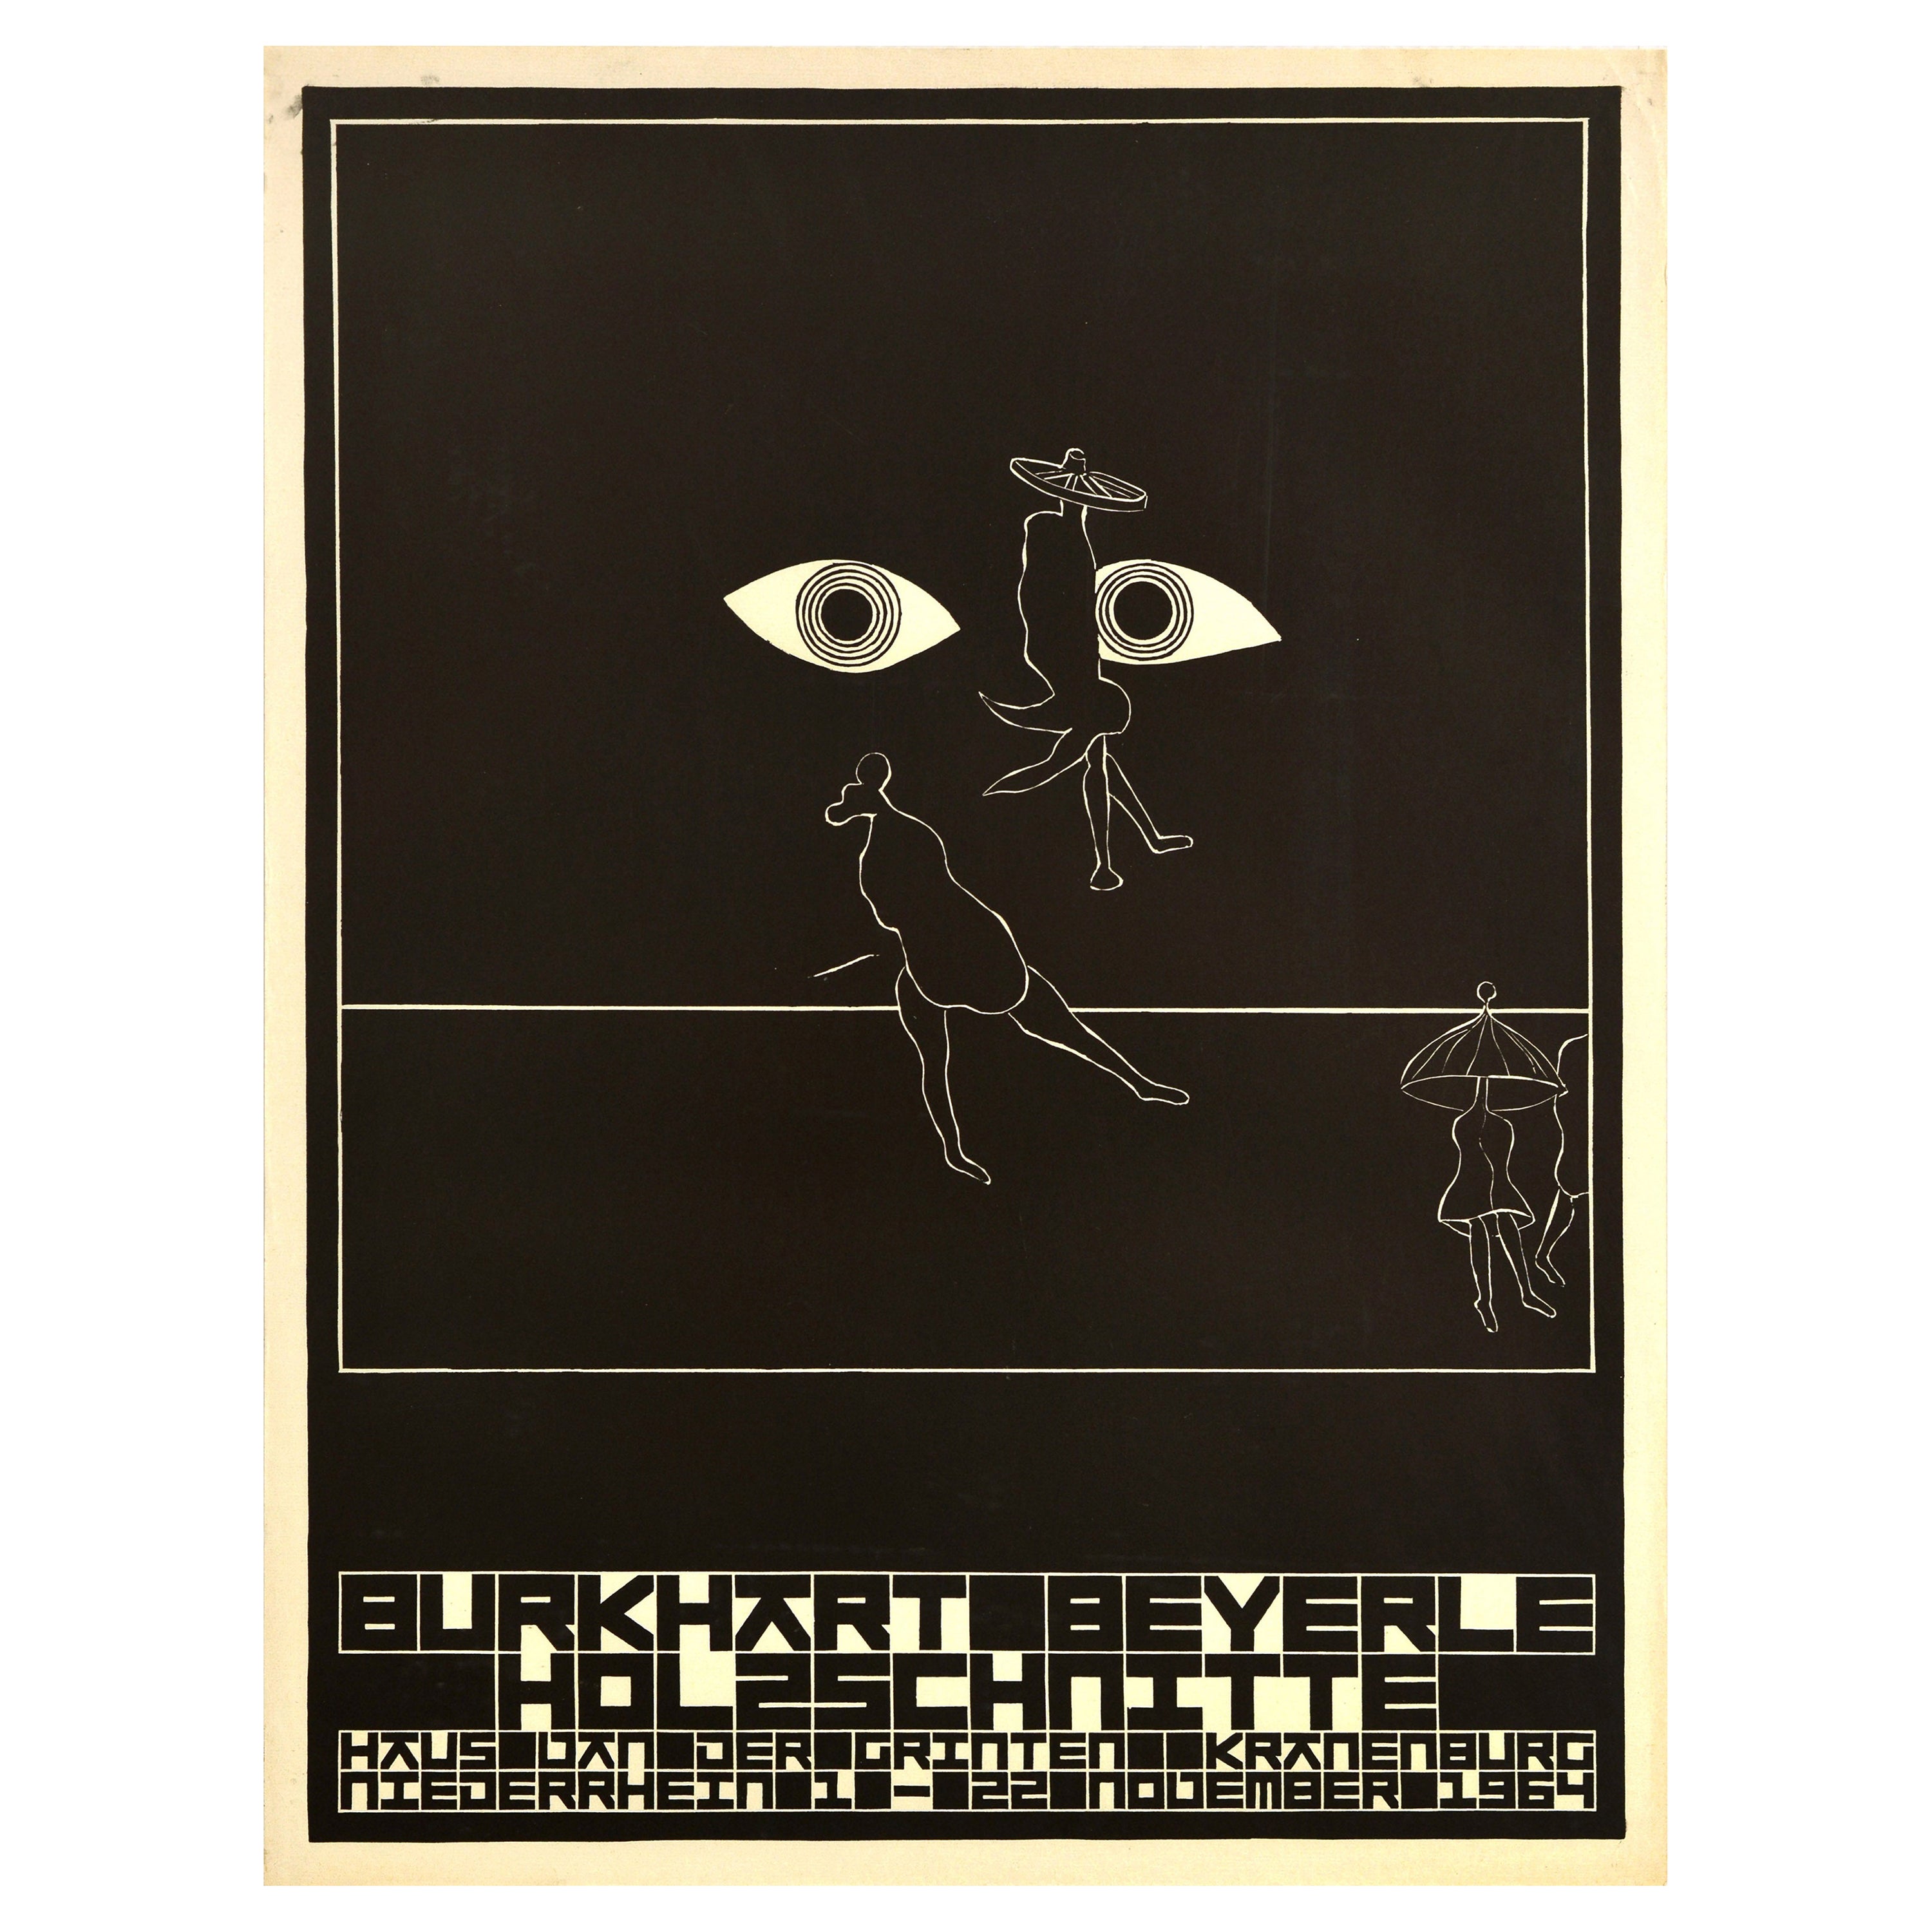 Original Vintage Advertising Poster Burkhart Beyerle Woodcuts Graphic Design Art